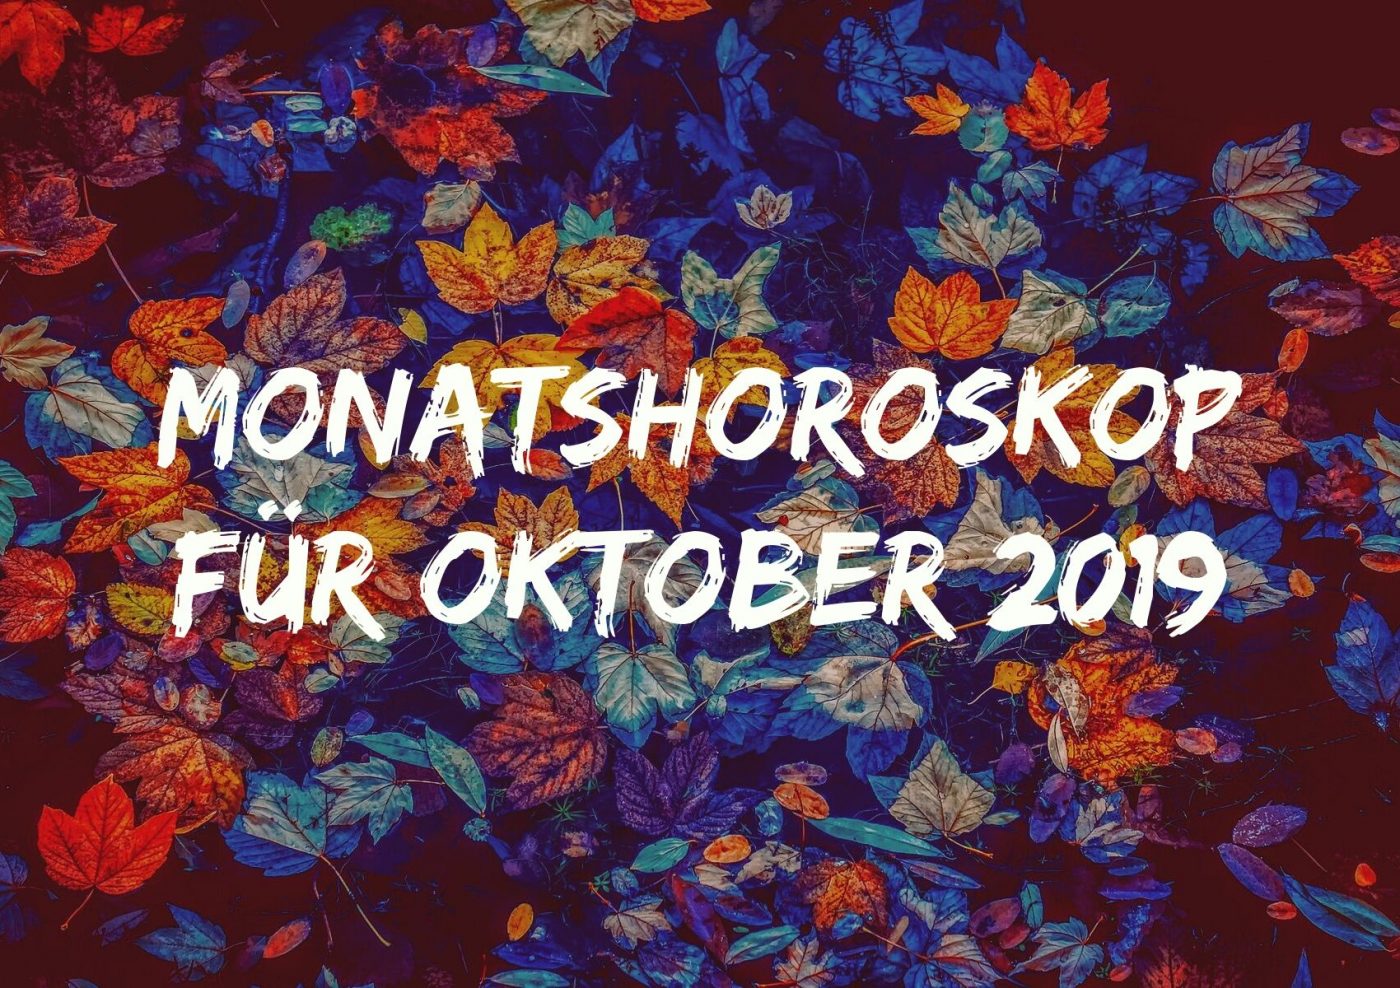 Monatshoroskop für Oktober 2019